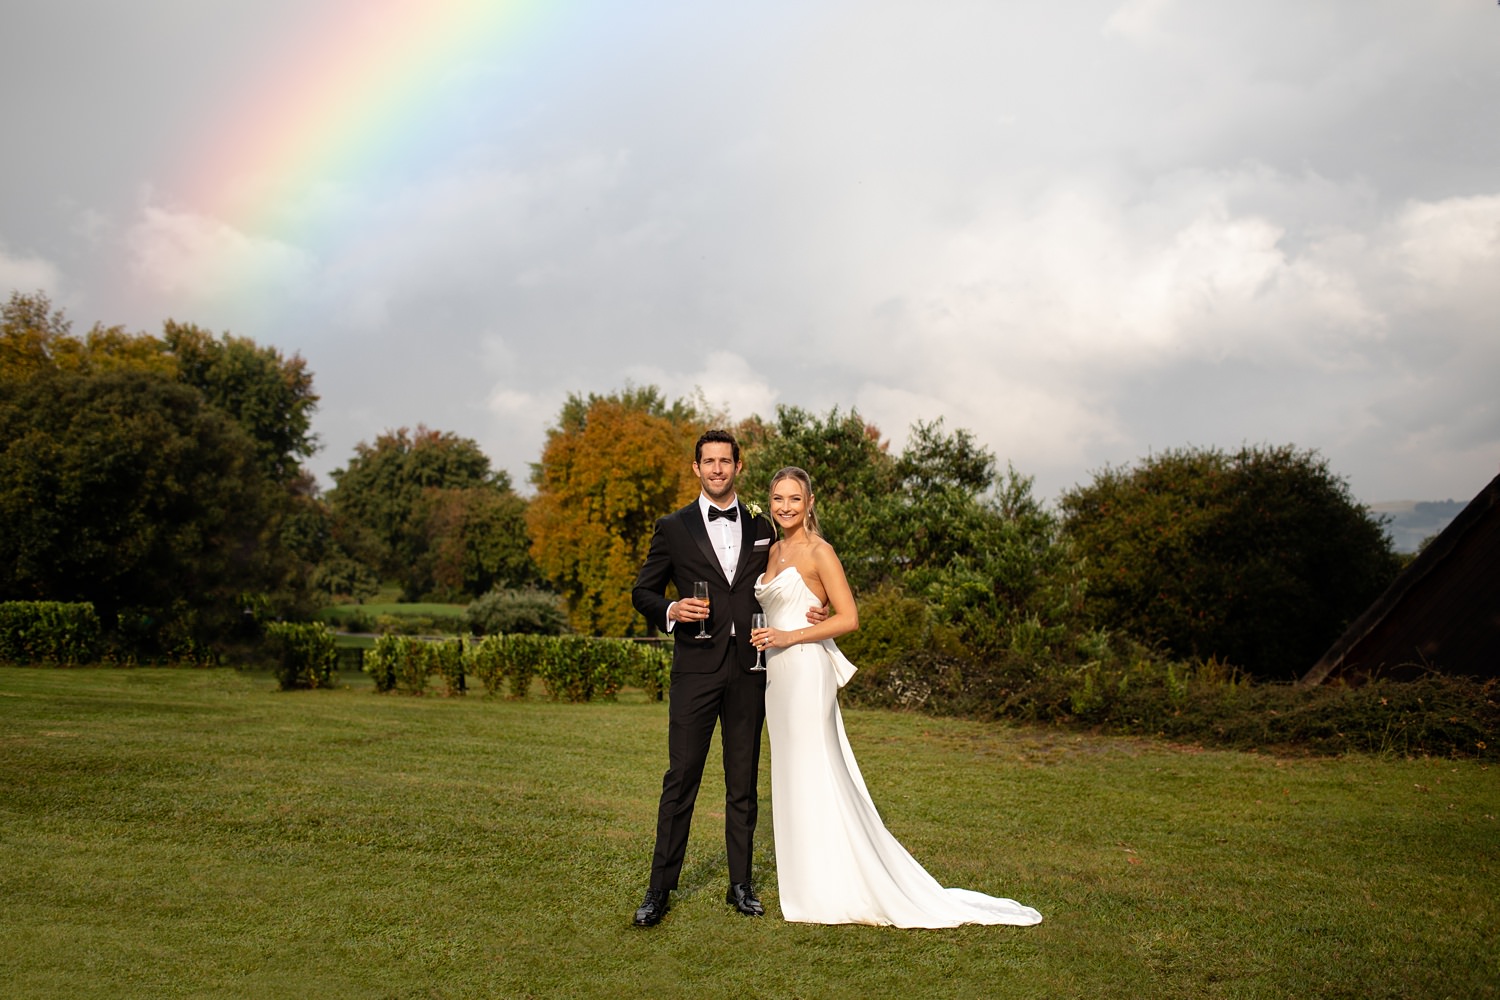 Sunshine and a rainbow after a rainy drakensberg wedding ceremony.